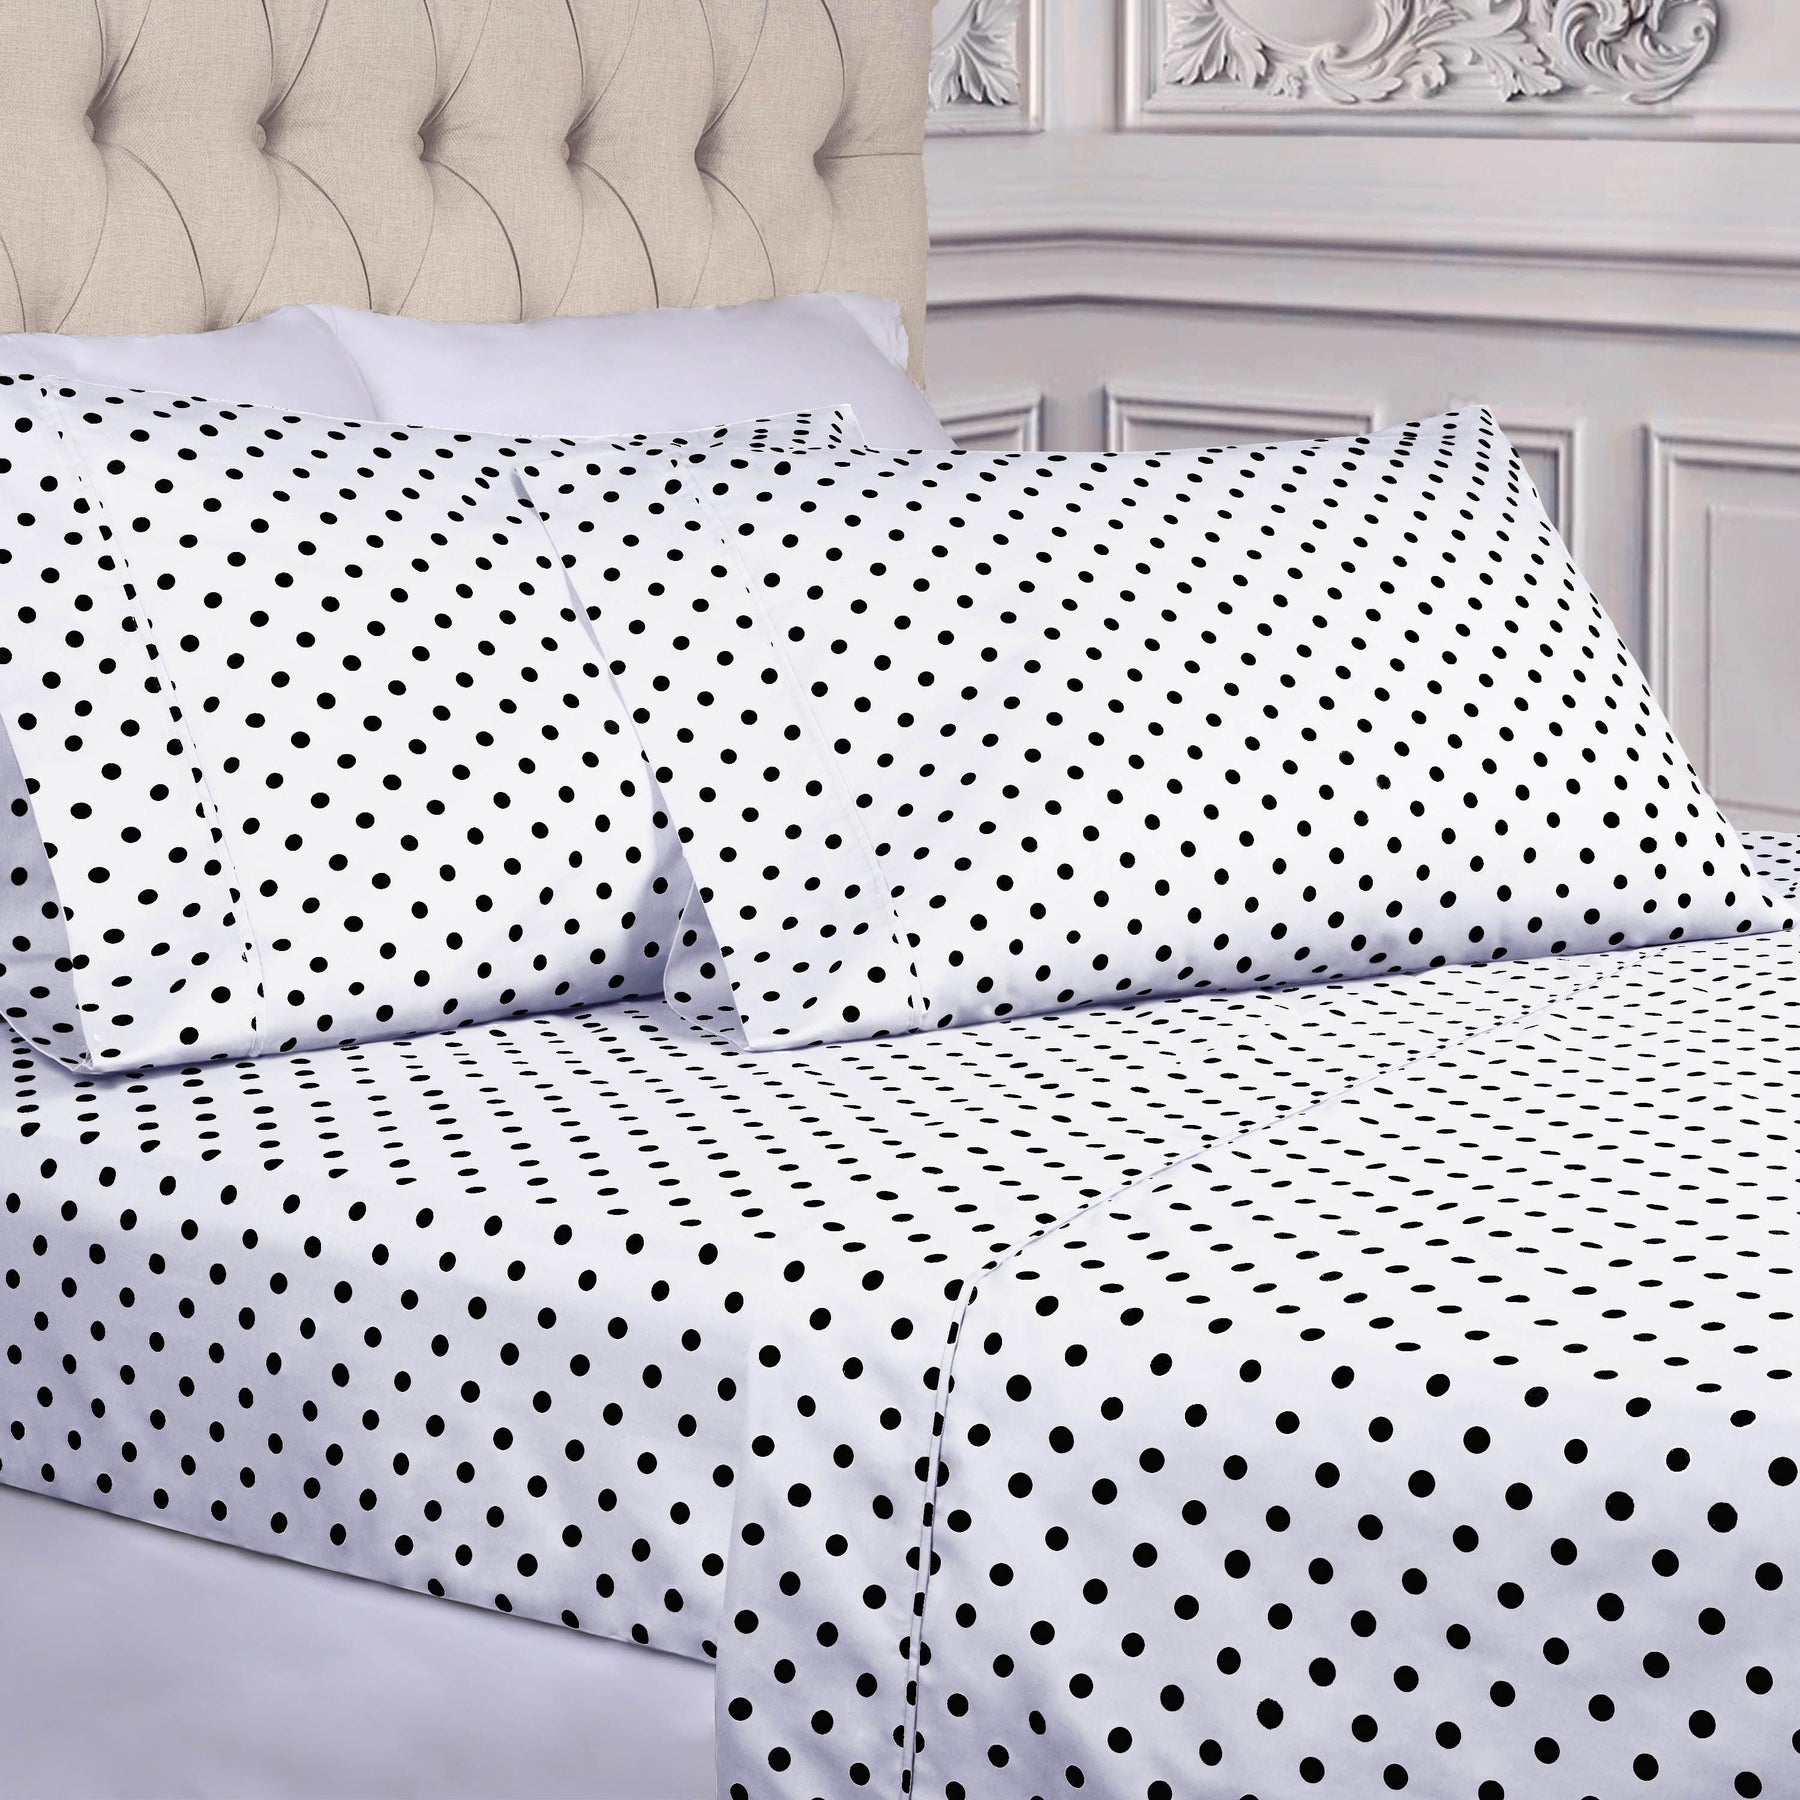 600 Thread Count Cotton Blend Polka Dot Luxury Deep Pocket Retro Bed Sheet Set - White